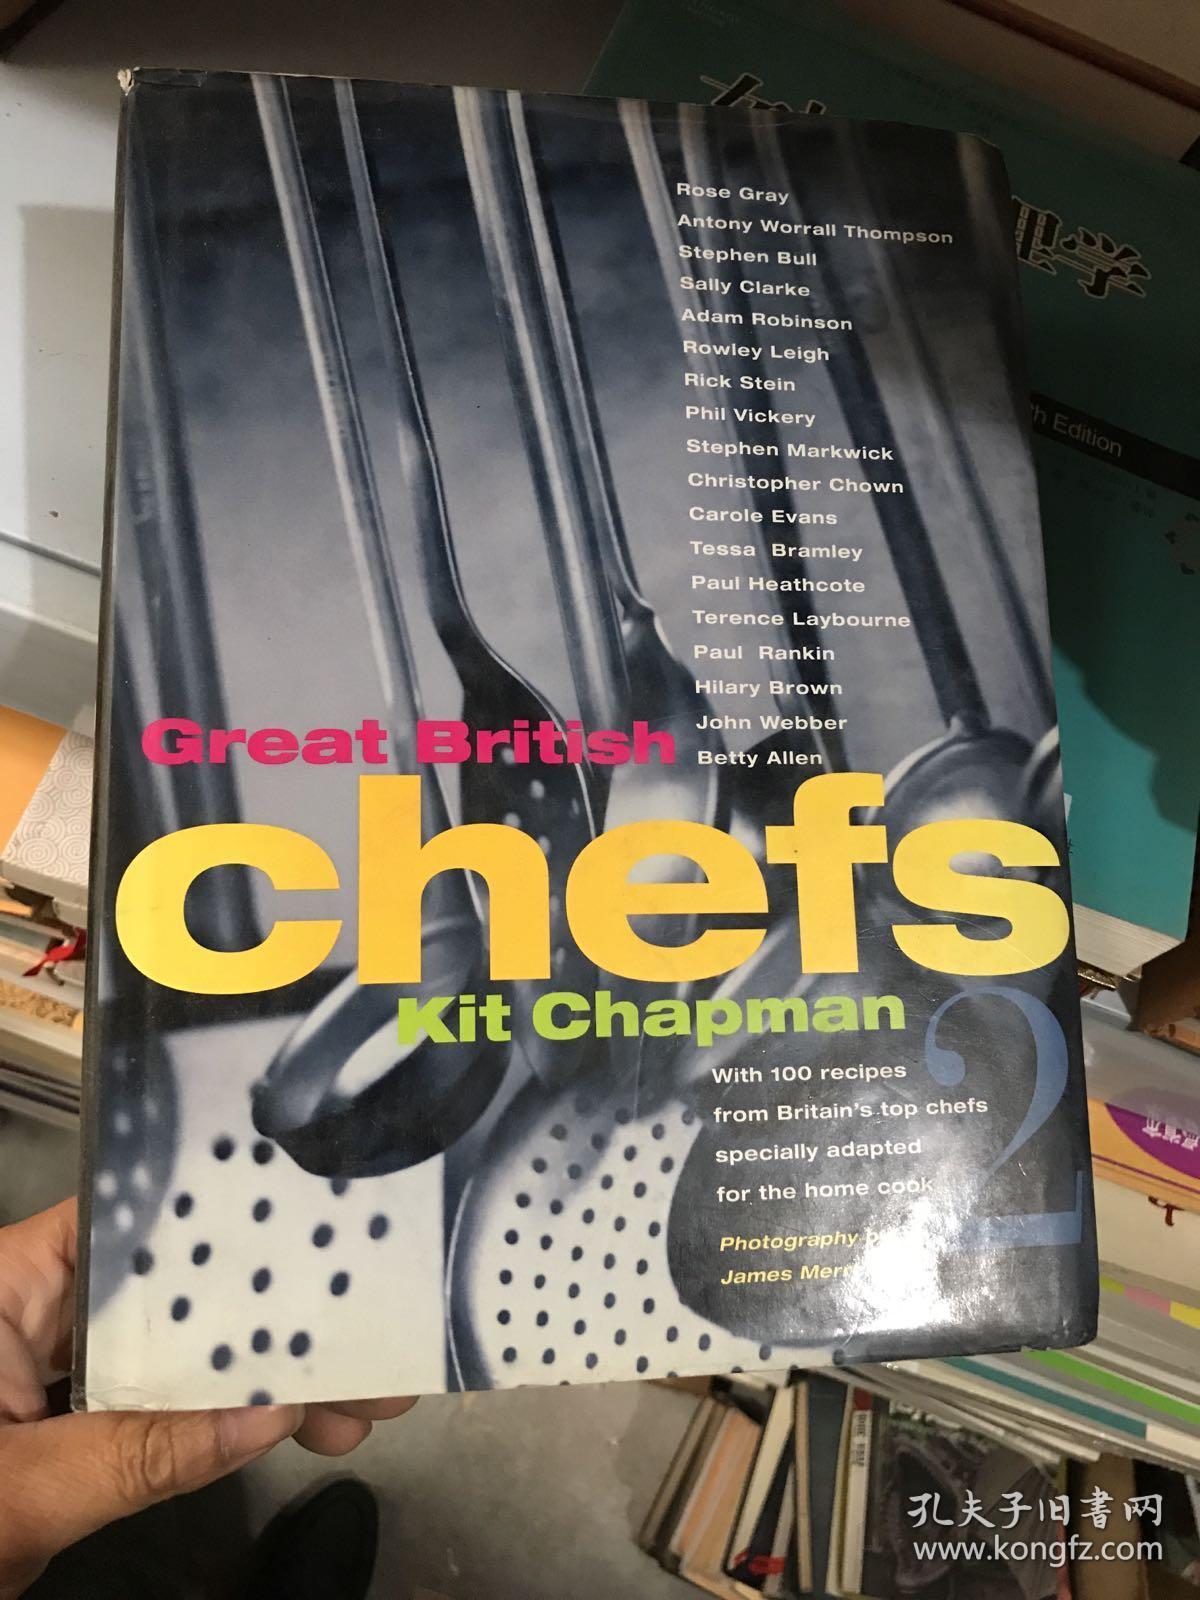 Great British Chefs 2 kit chapman